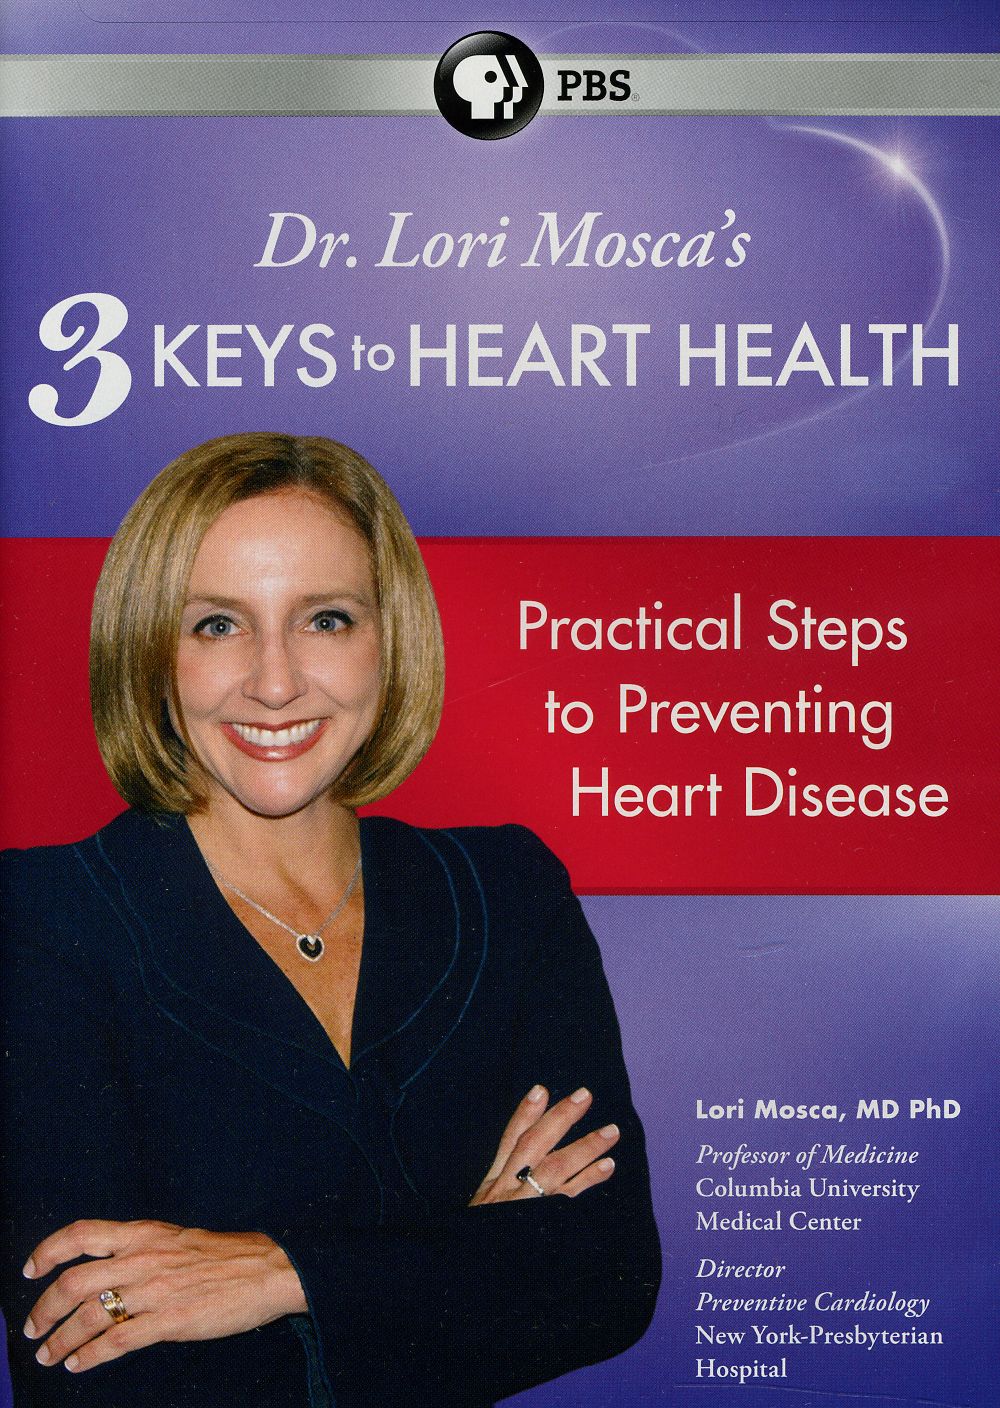 DR LORI MOSCA'S 3 KEYS TO HEART HEALTH